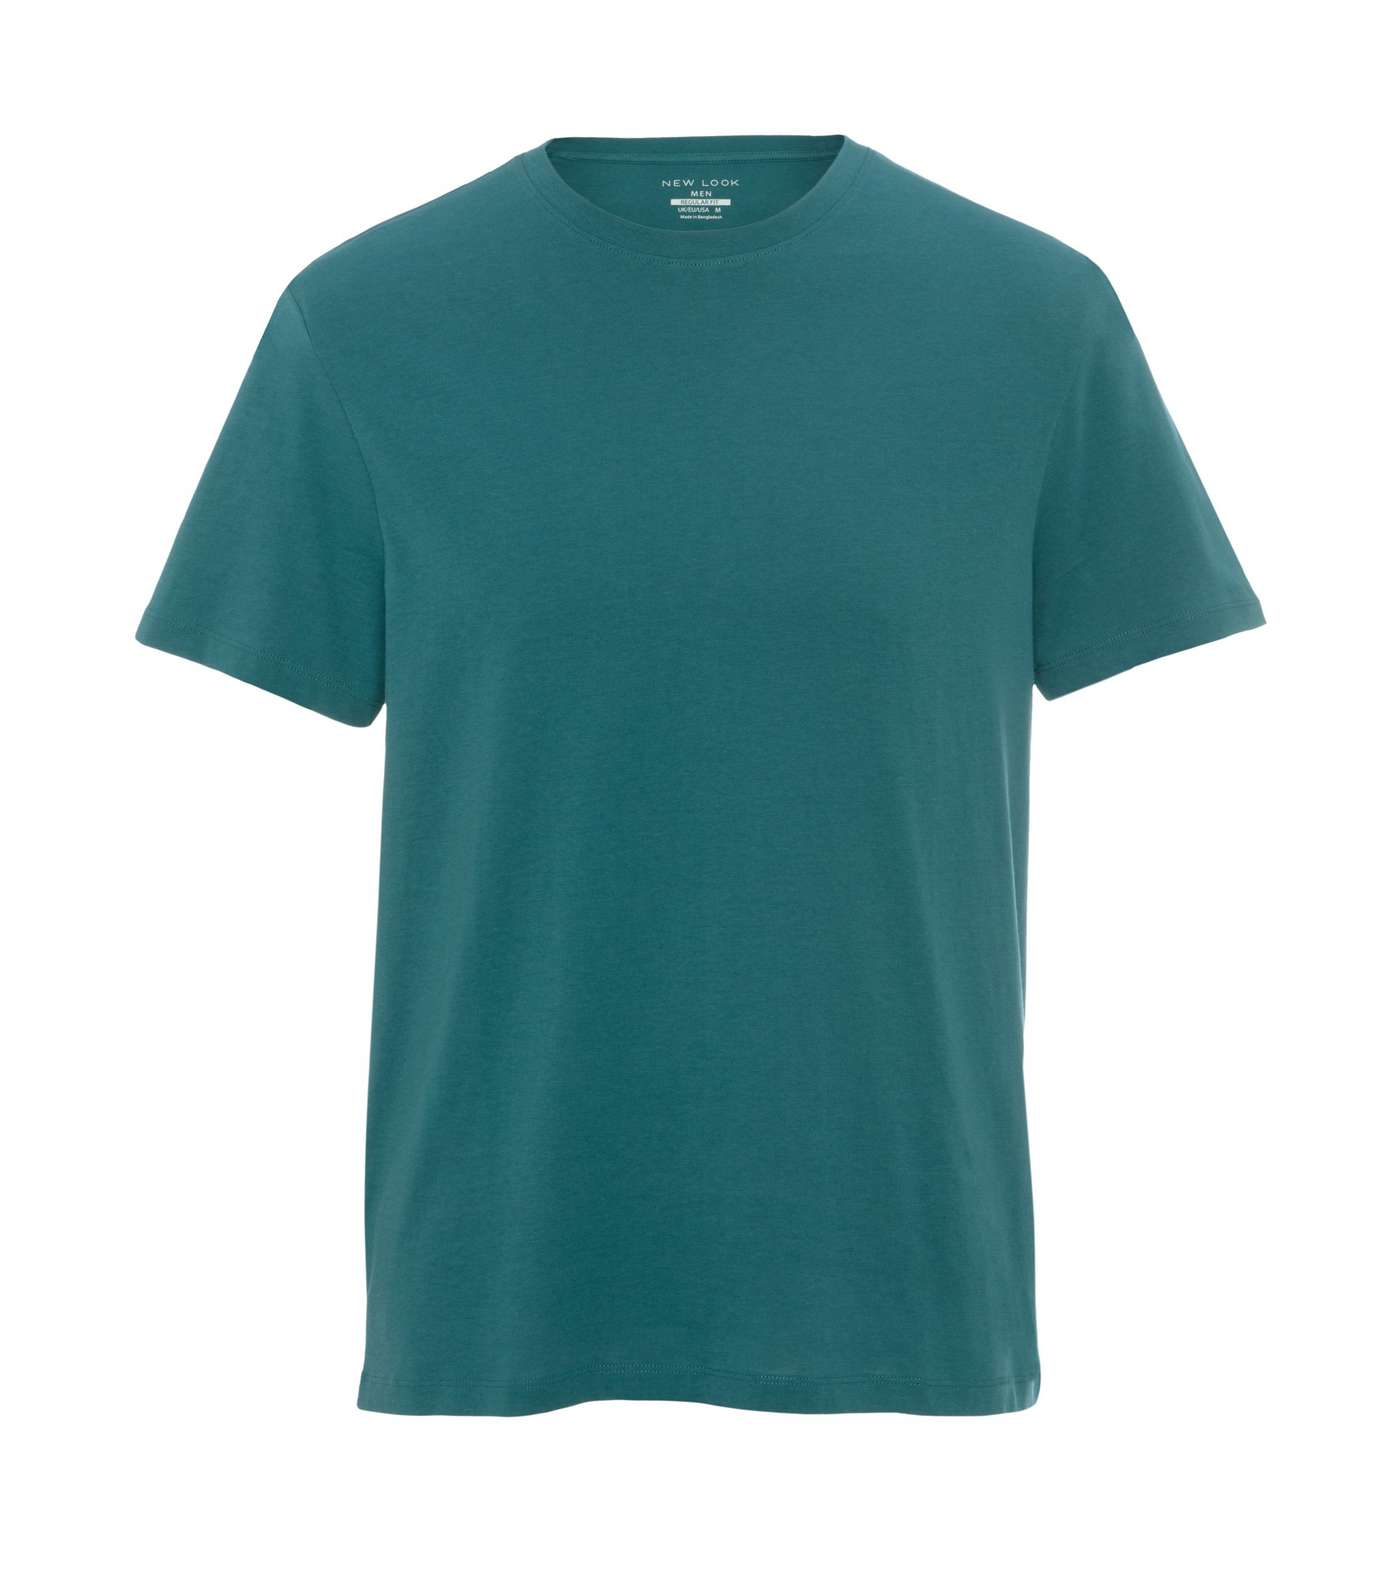 Teal Plain Short Sleeve T-Shirt Image 3